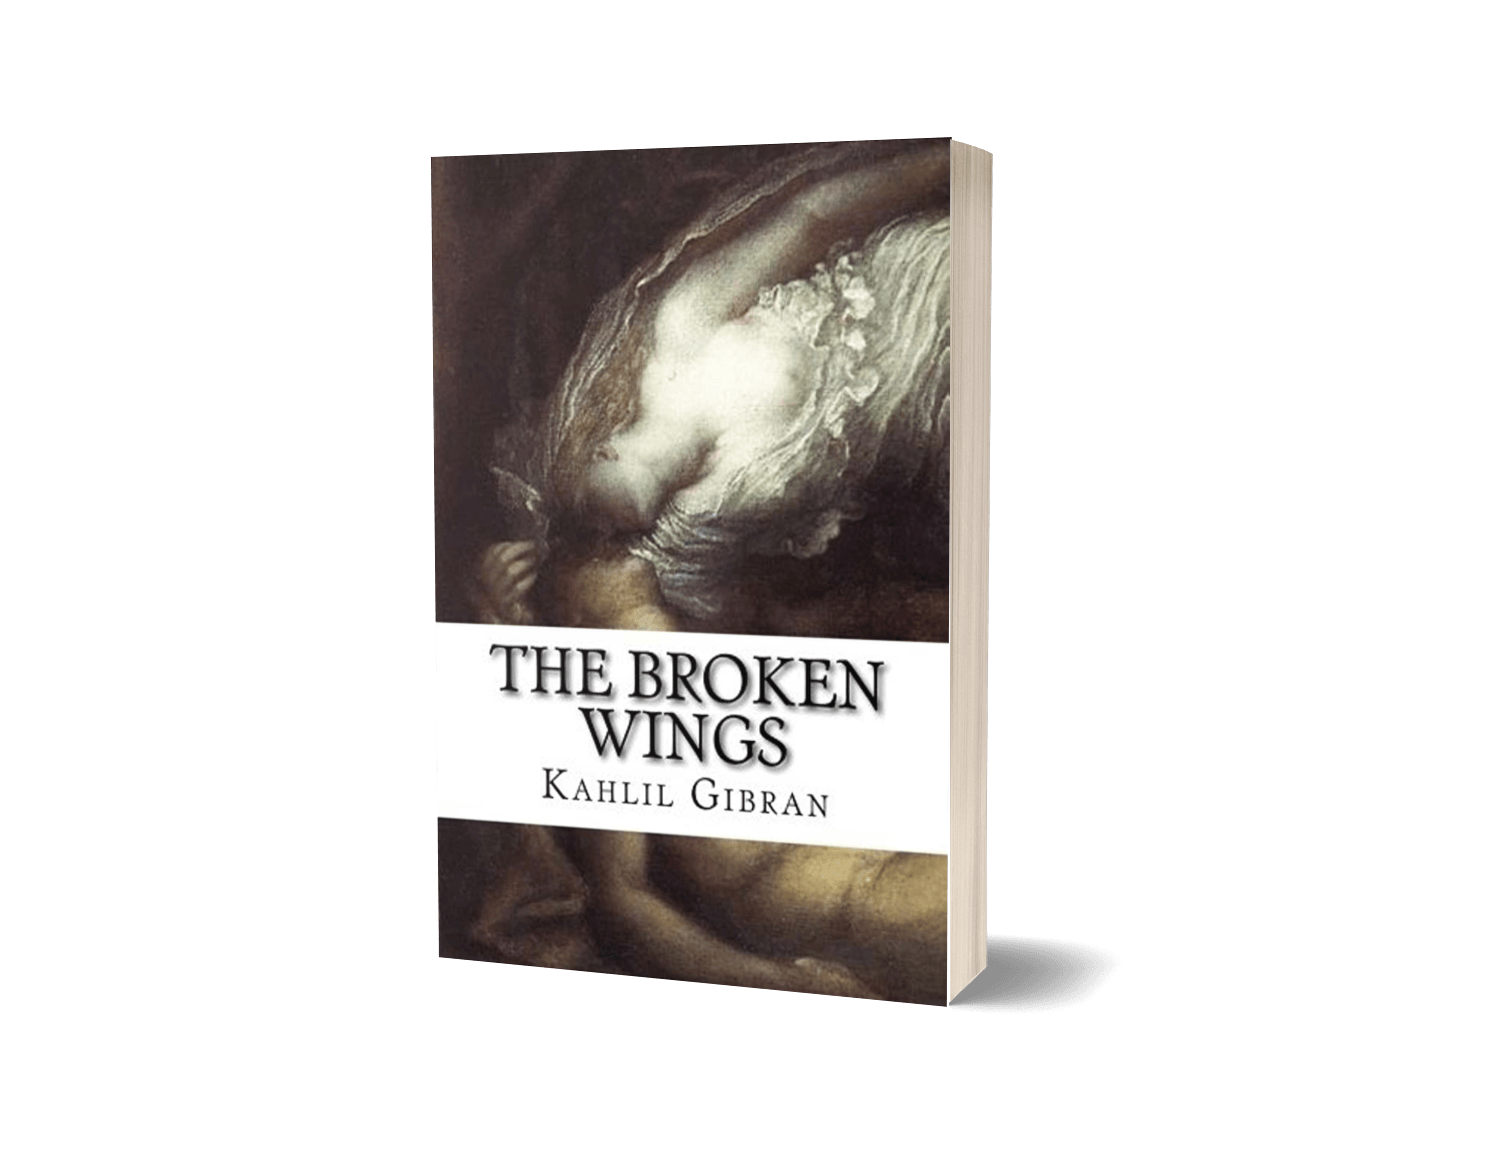 The Broken Wings by Khalil Gibran